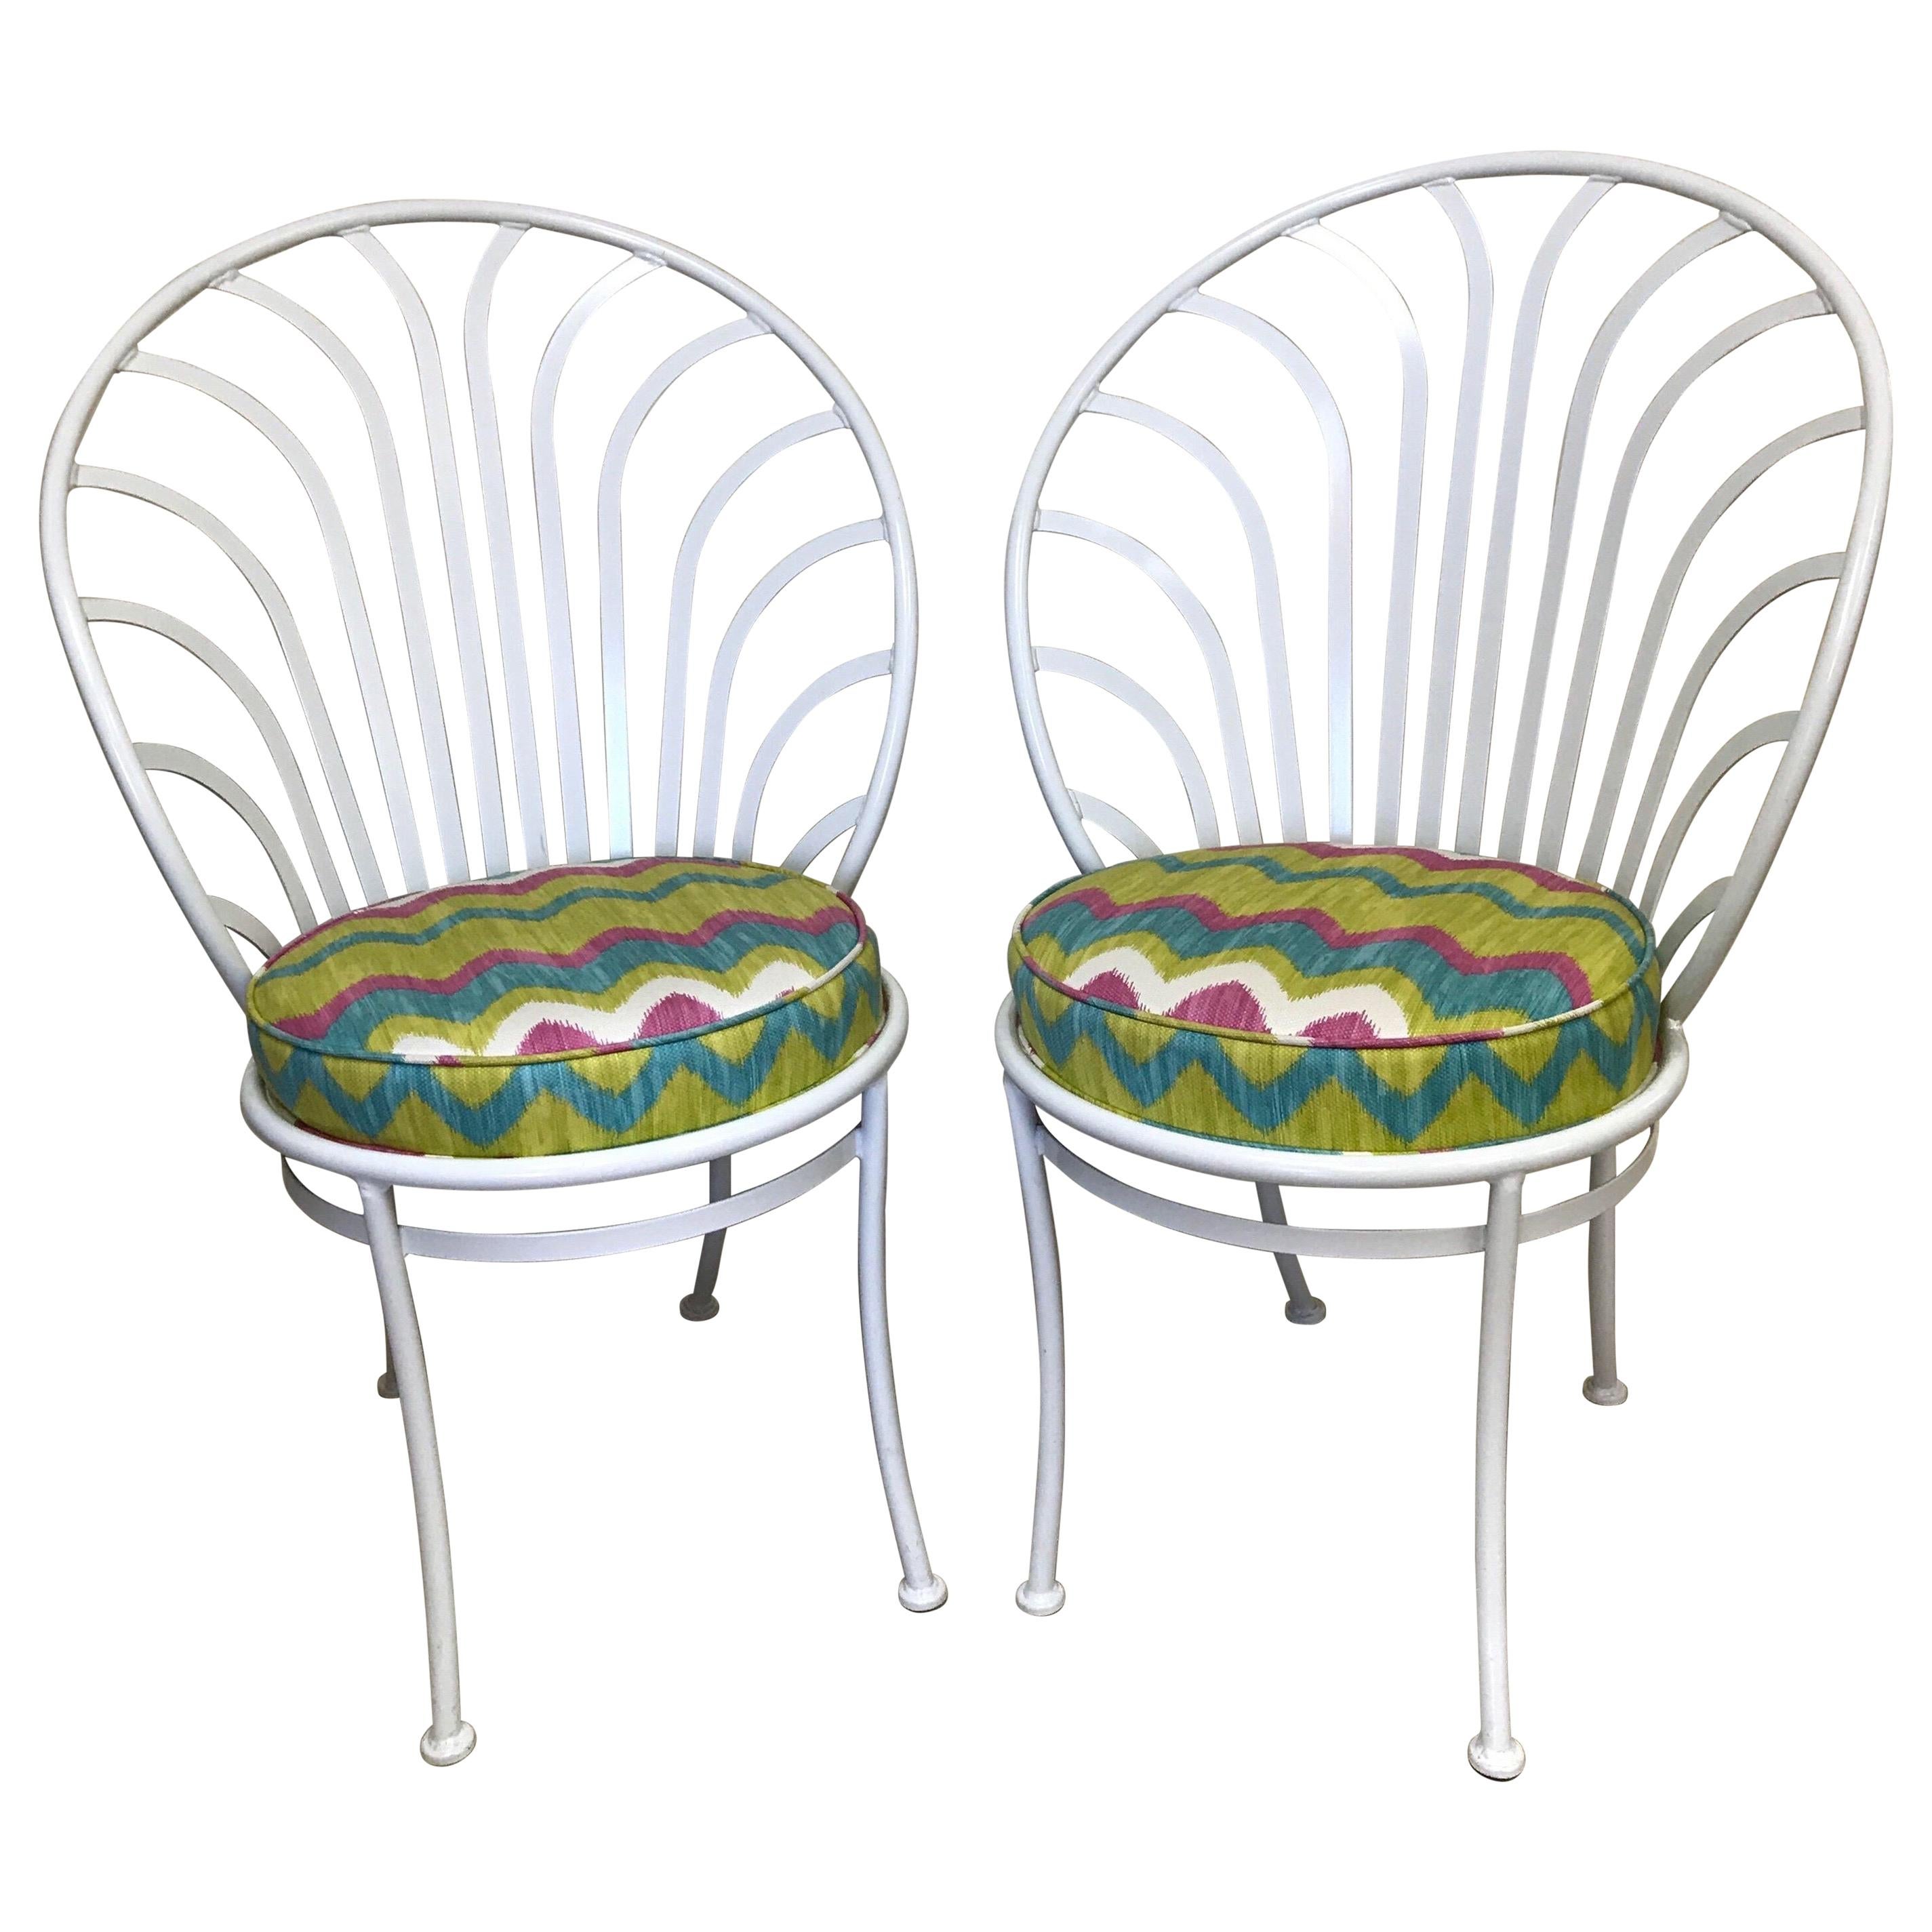 Pair of Painted Metal Peacock Chairs